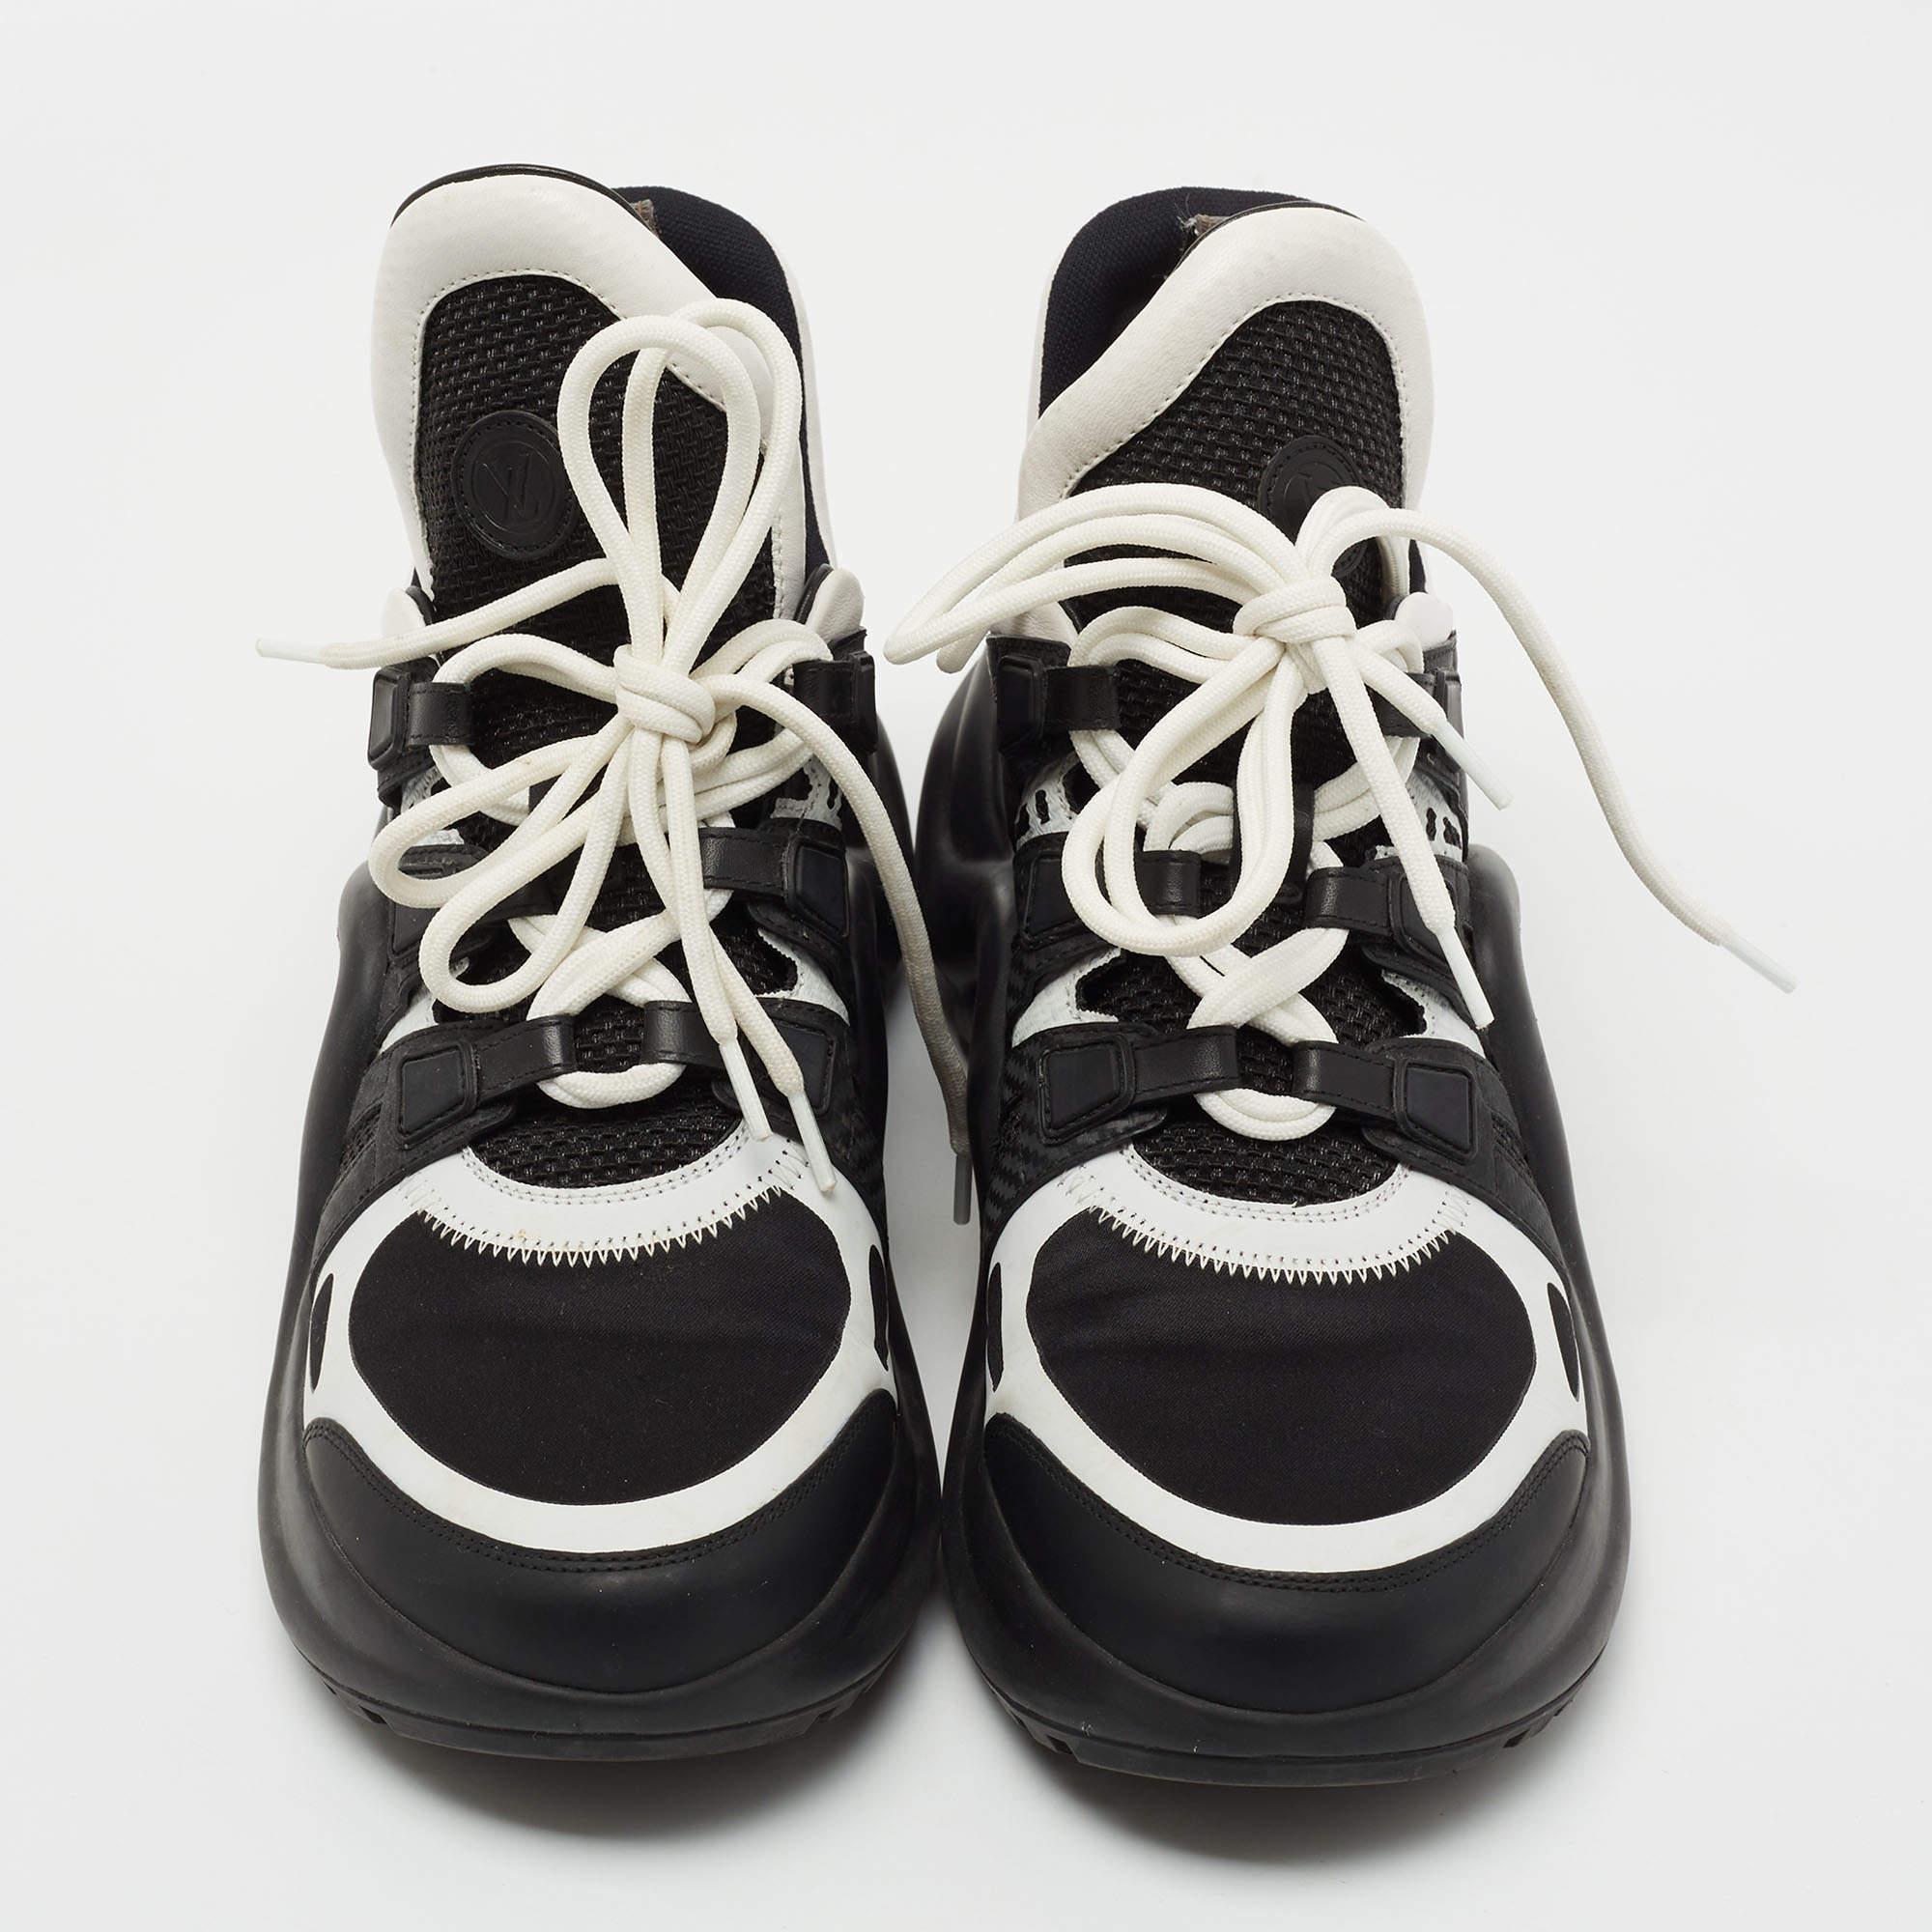 LOUIS VUITTON ARCHLIGHT TRAINER BLACK WHITE  Louis vuitton shoes, Louis  vuitton, Swag shoes